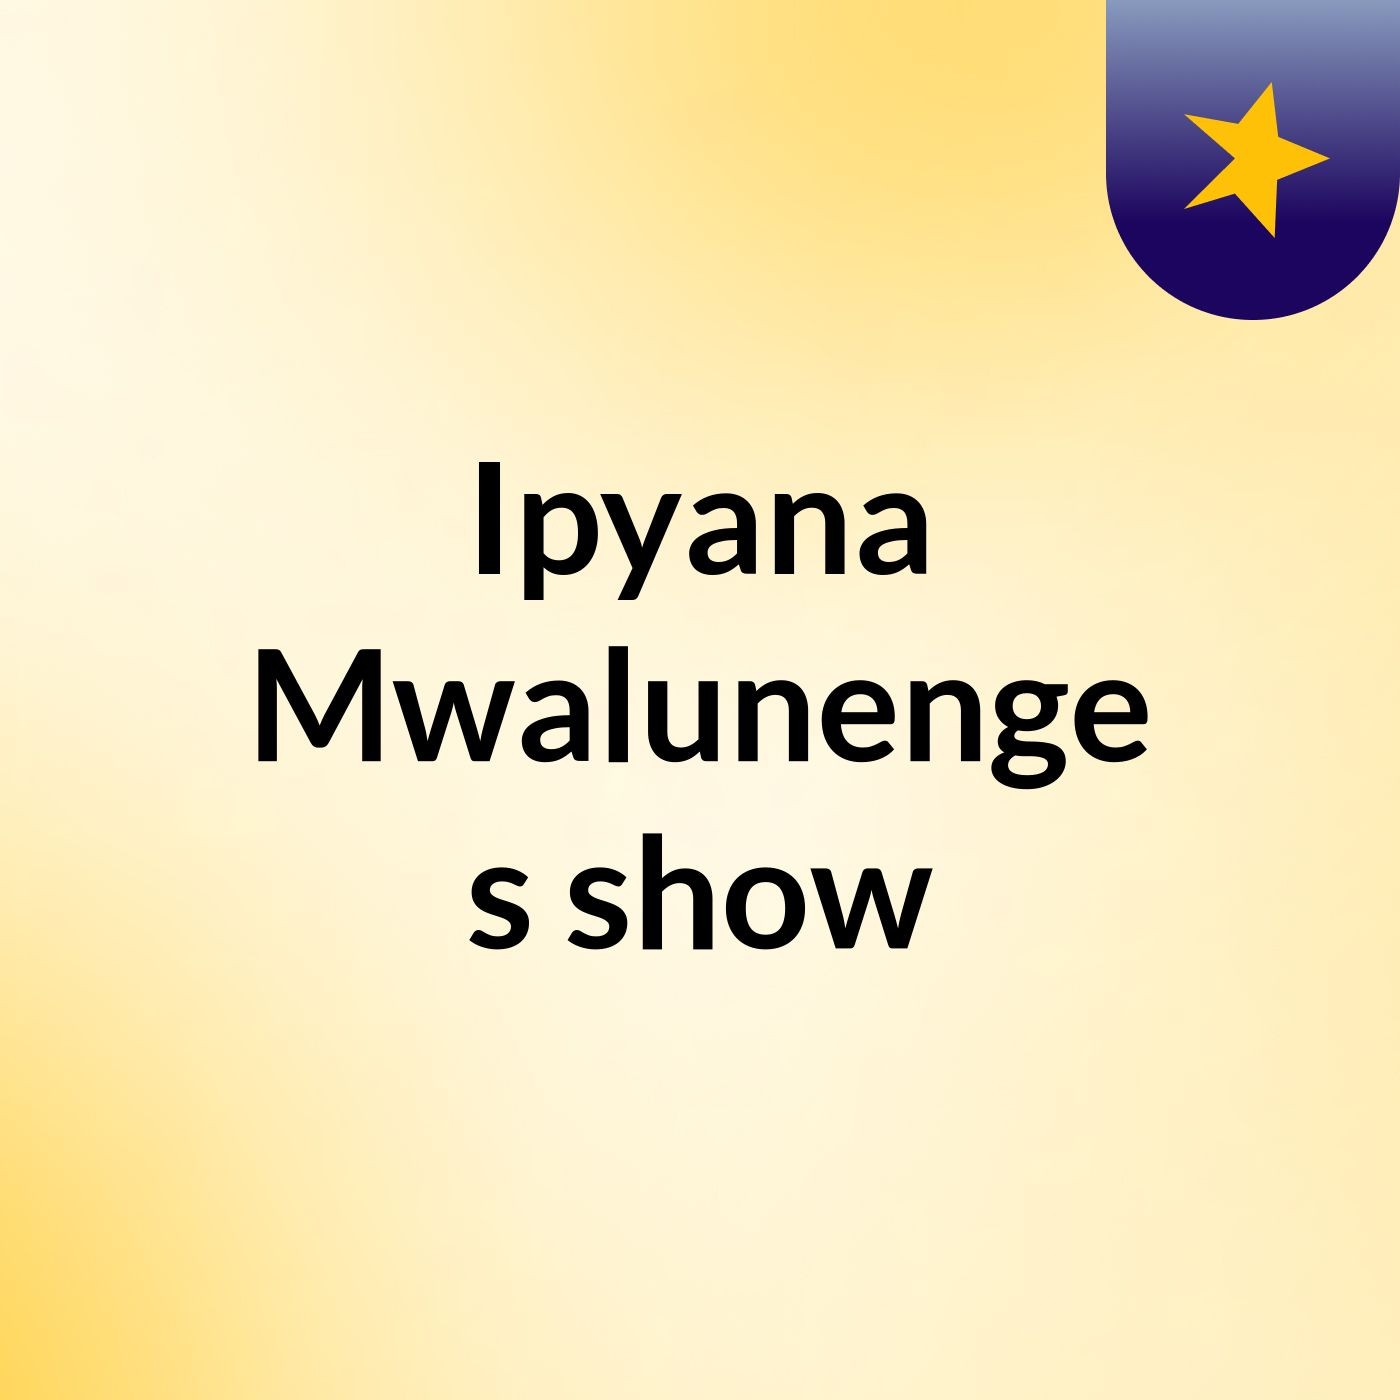 Ipyana Mwalunenge's show